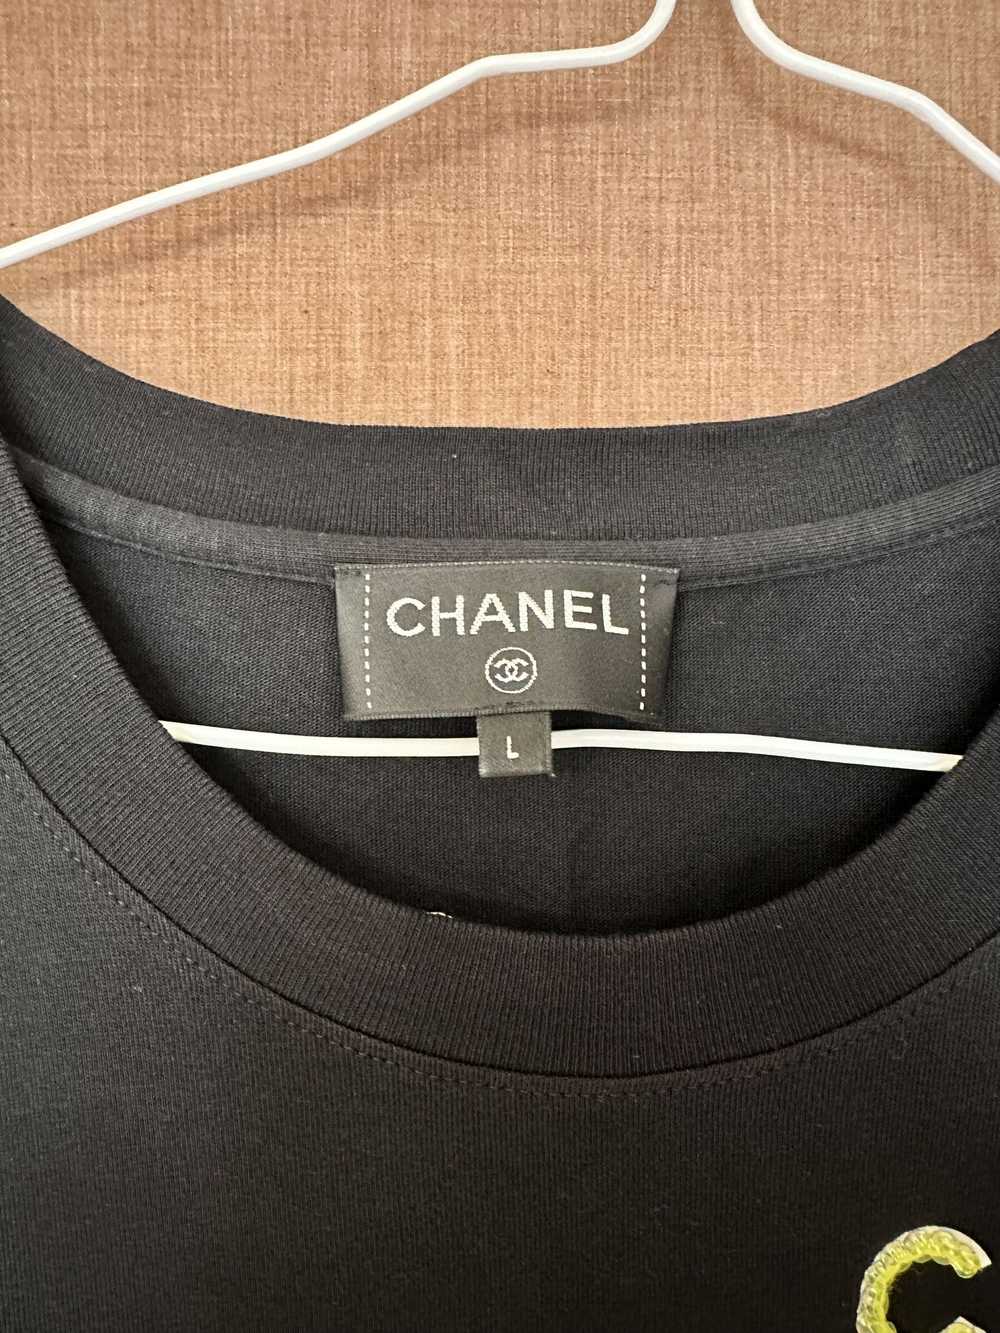 Chanel Chanel x Pharrell Coco Chanel Logo T-Shirt - image 2